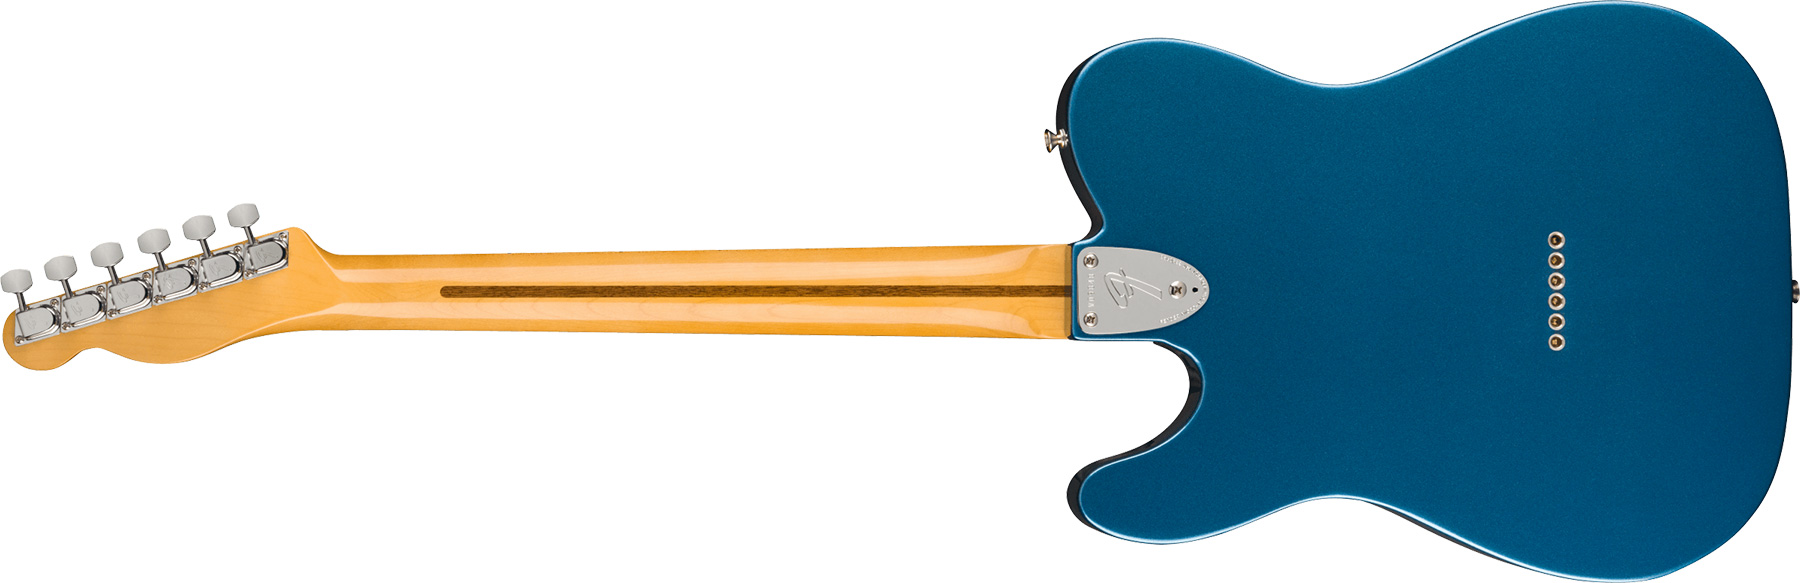 Fender Tele Thinline 1972 American Vintage Ii Usa 2h Ht Mn - Lake Placid Blue - E-Gitarre in Teleform - Variation 1